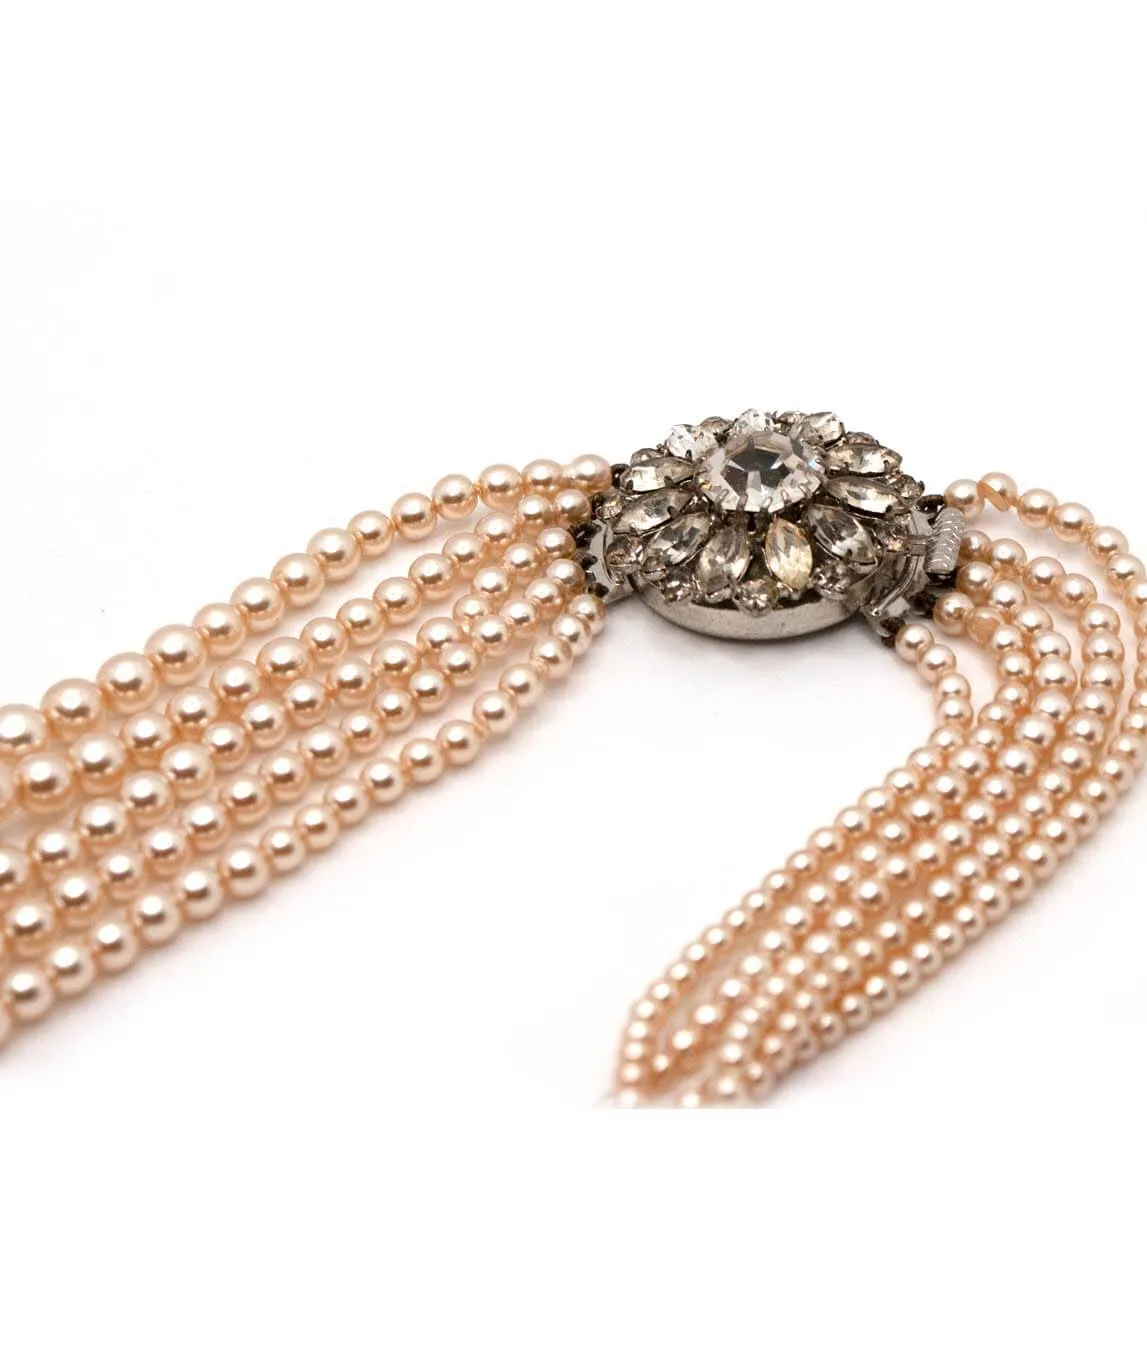 decorative clasp of Vintage multi-strand faux pearl necklace profile